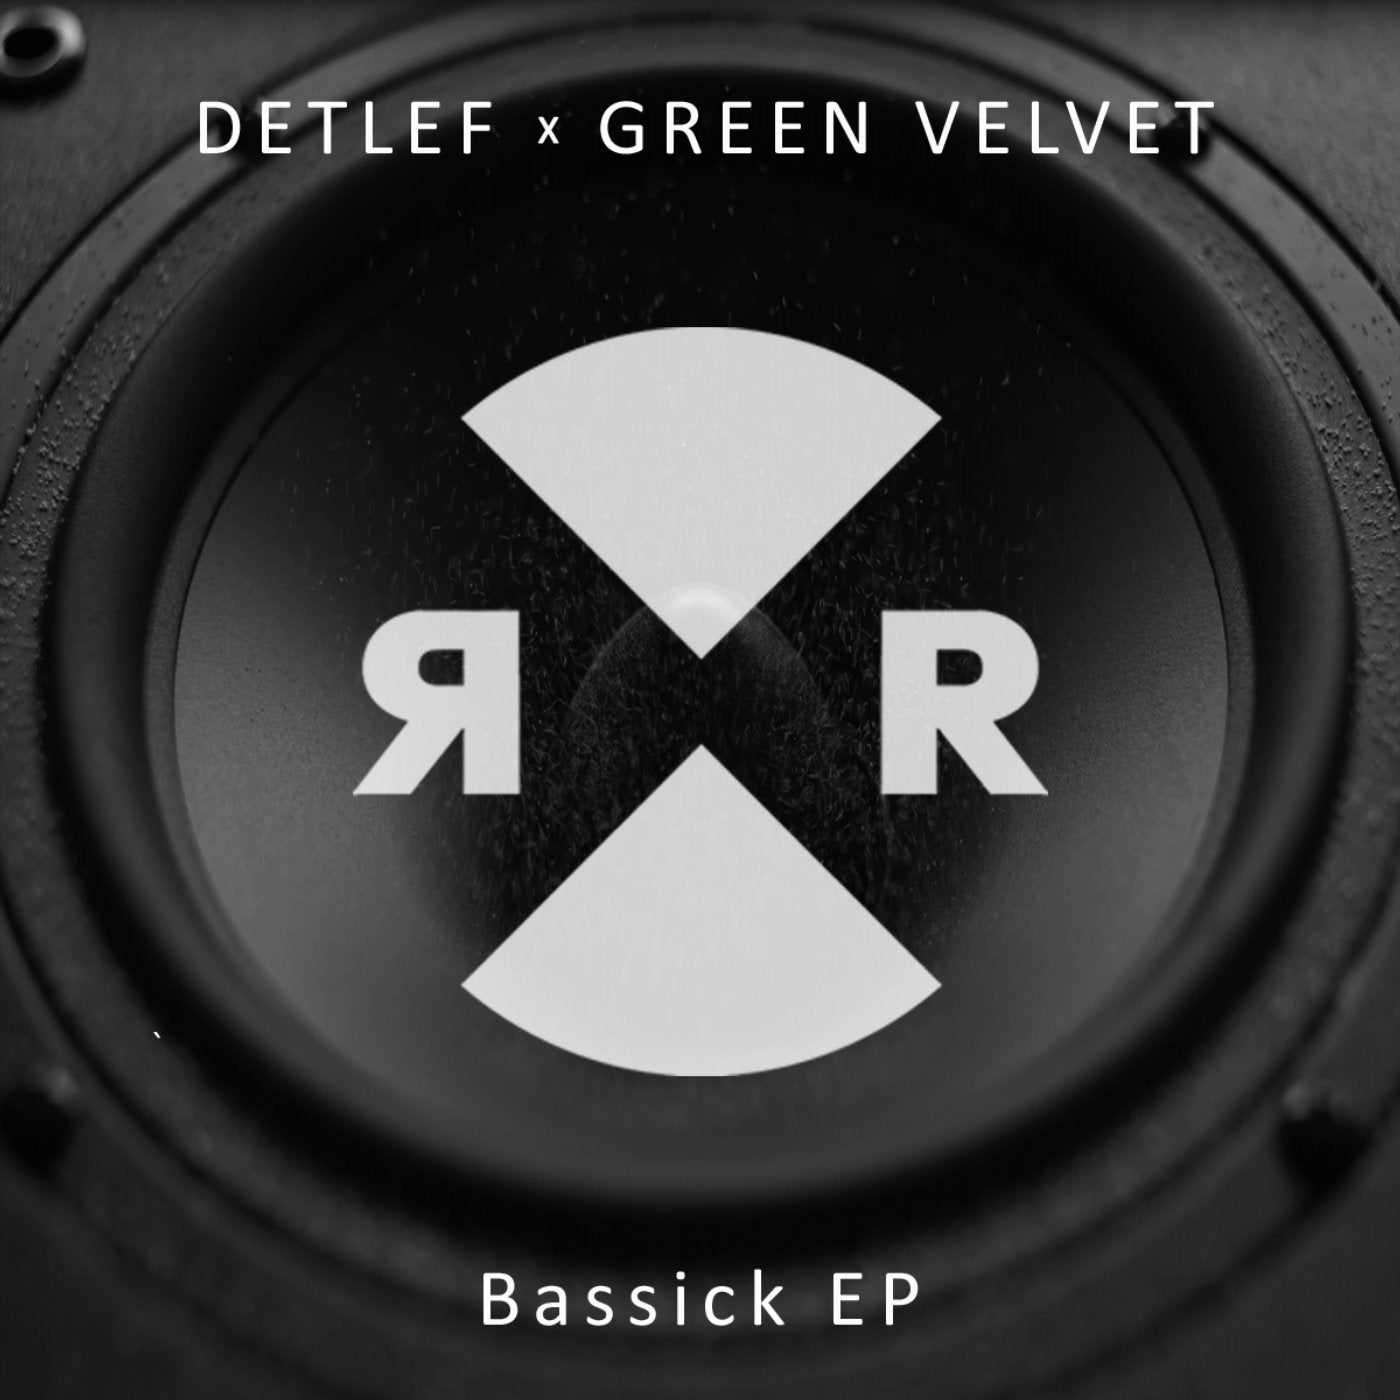 Bassick EP